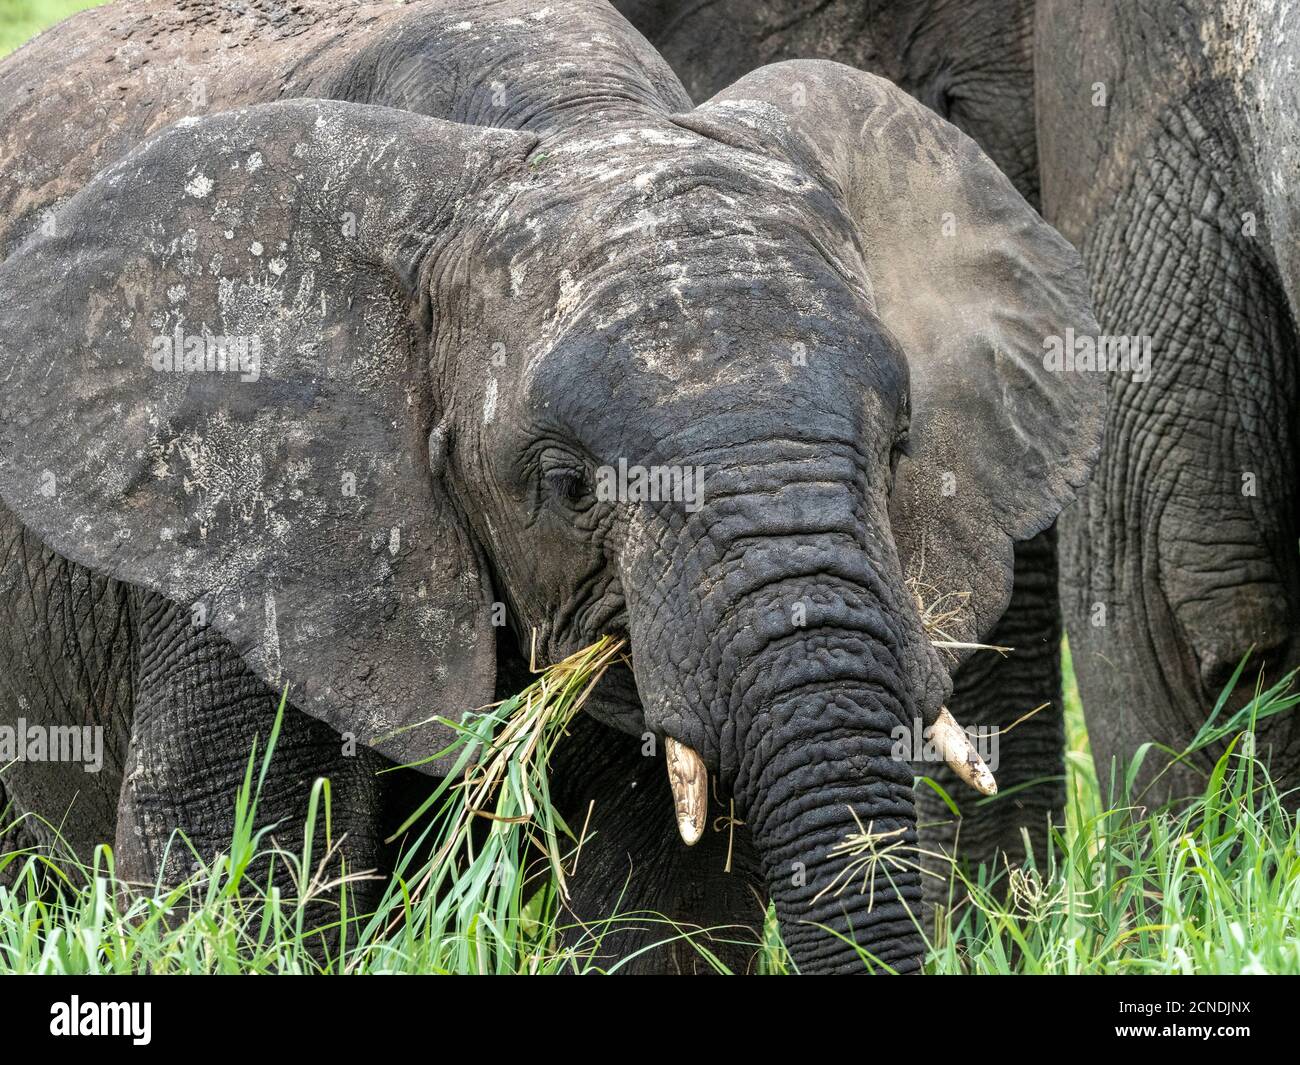 A young African bush elephant (Loxodonta africana), Tarangire National Park, Tanzania, East Africa, Africa Stock Photo